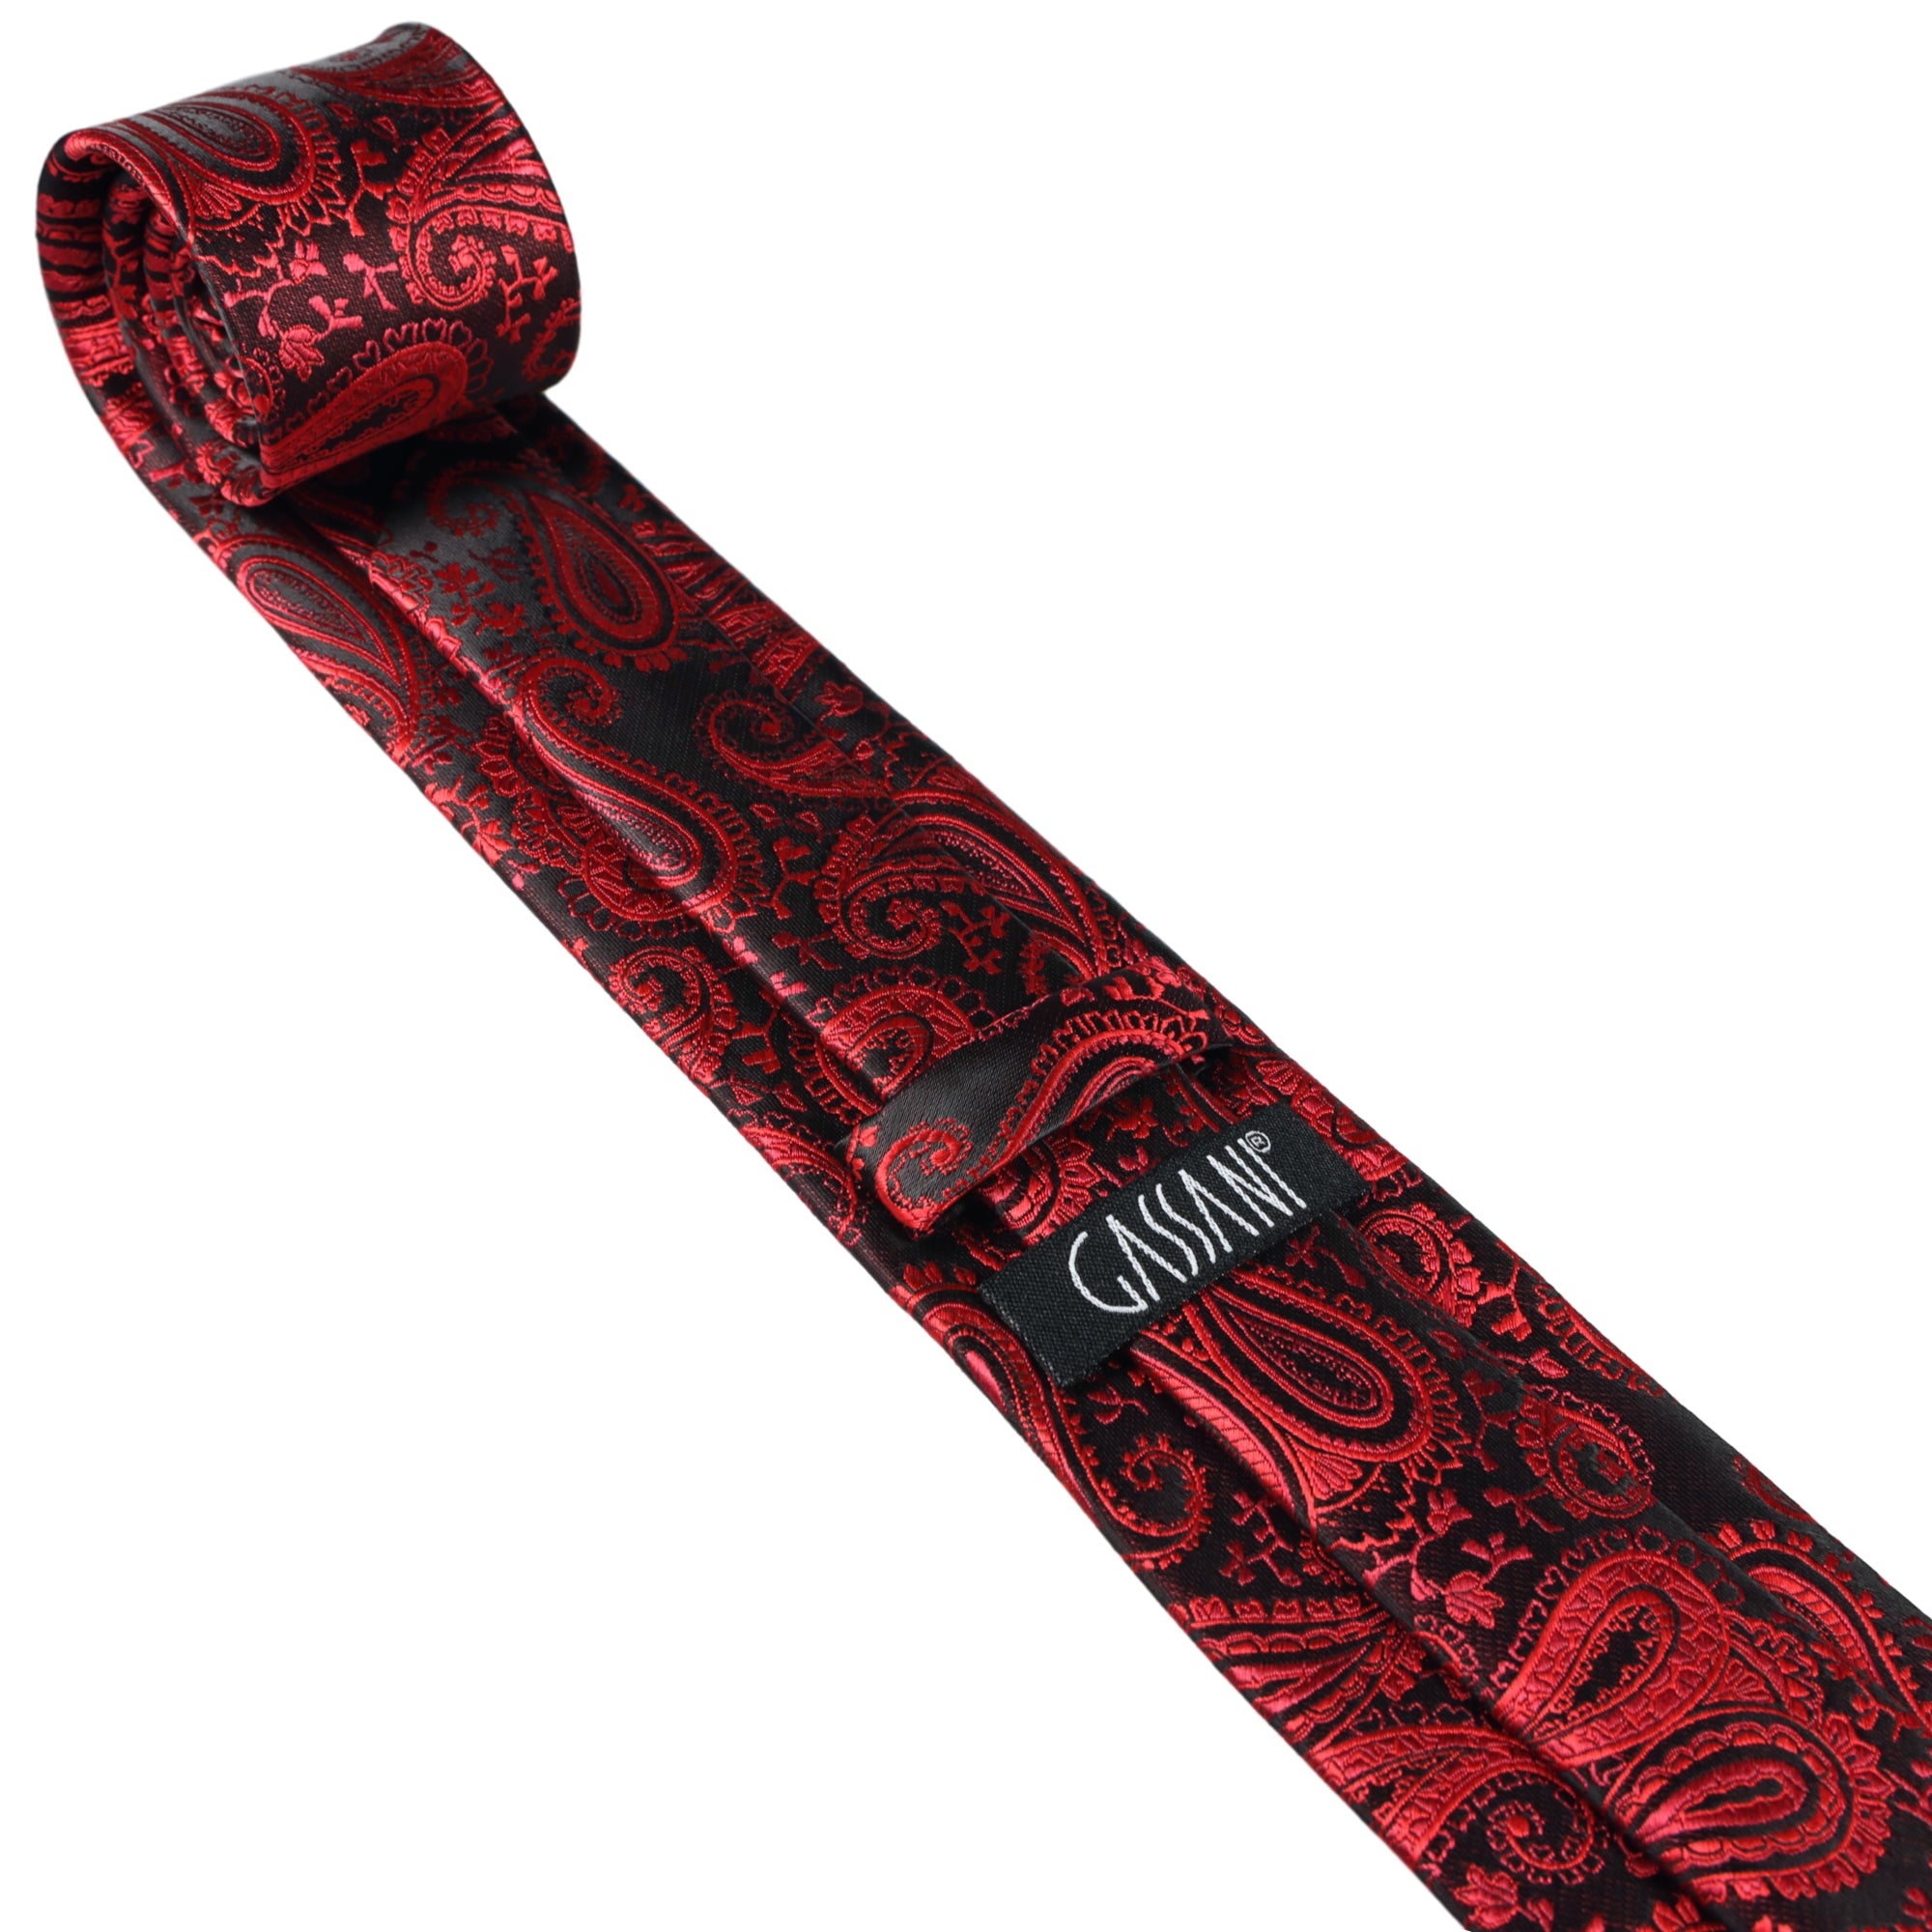 Kaufen Sie Bordeaux-Rote Paisley-Krawatte | GASSANI - f. Krawatten GASSANIshop.de Designt